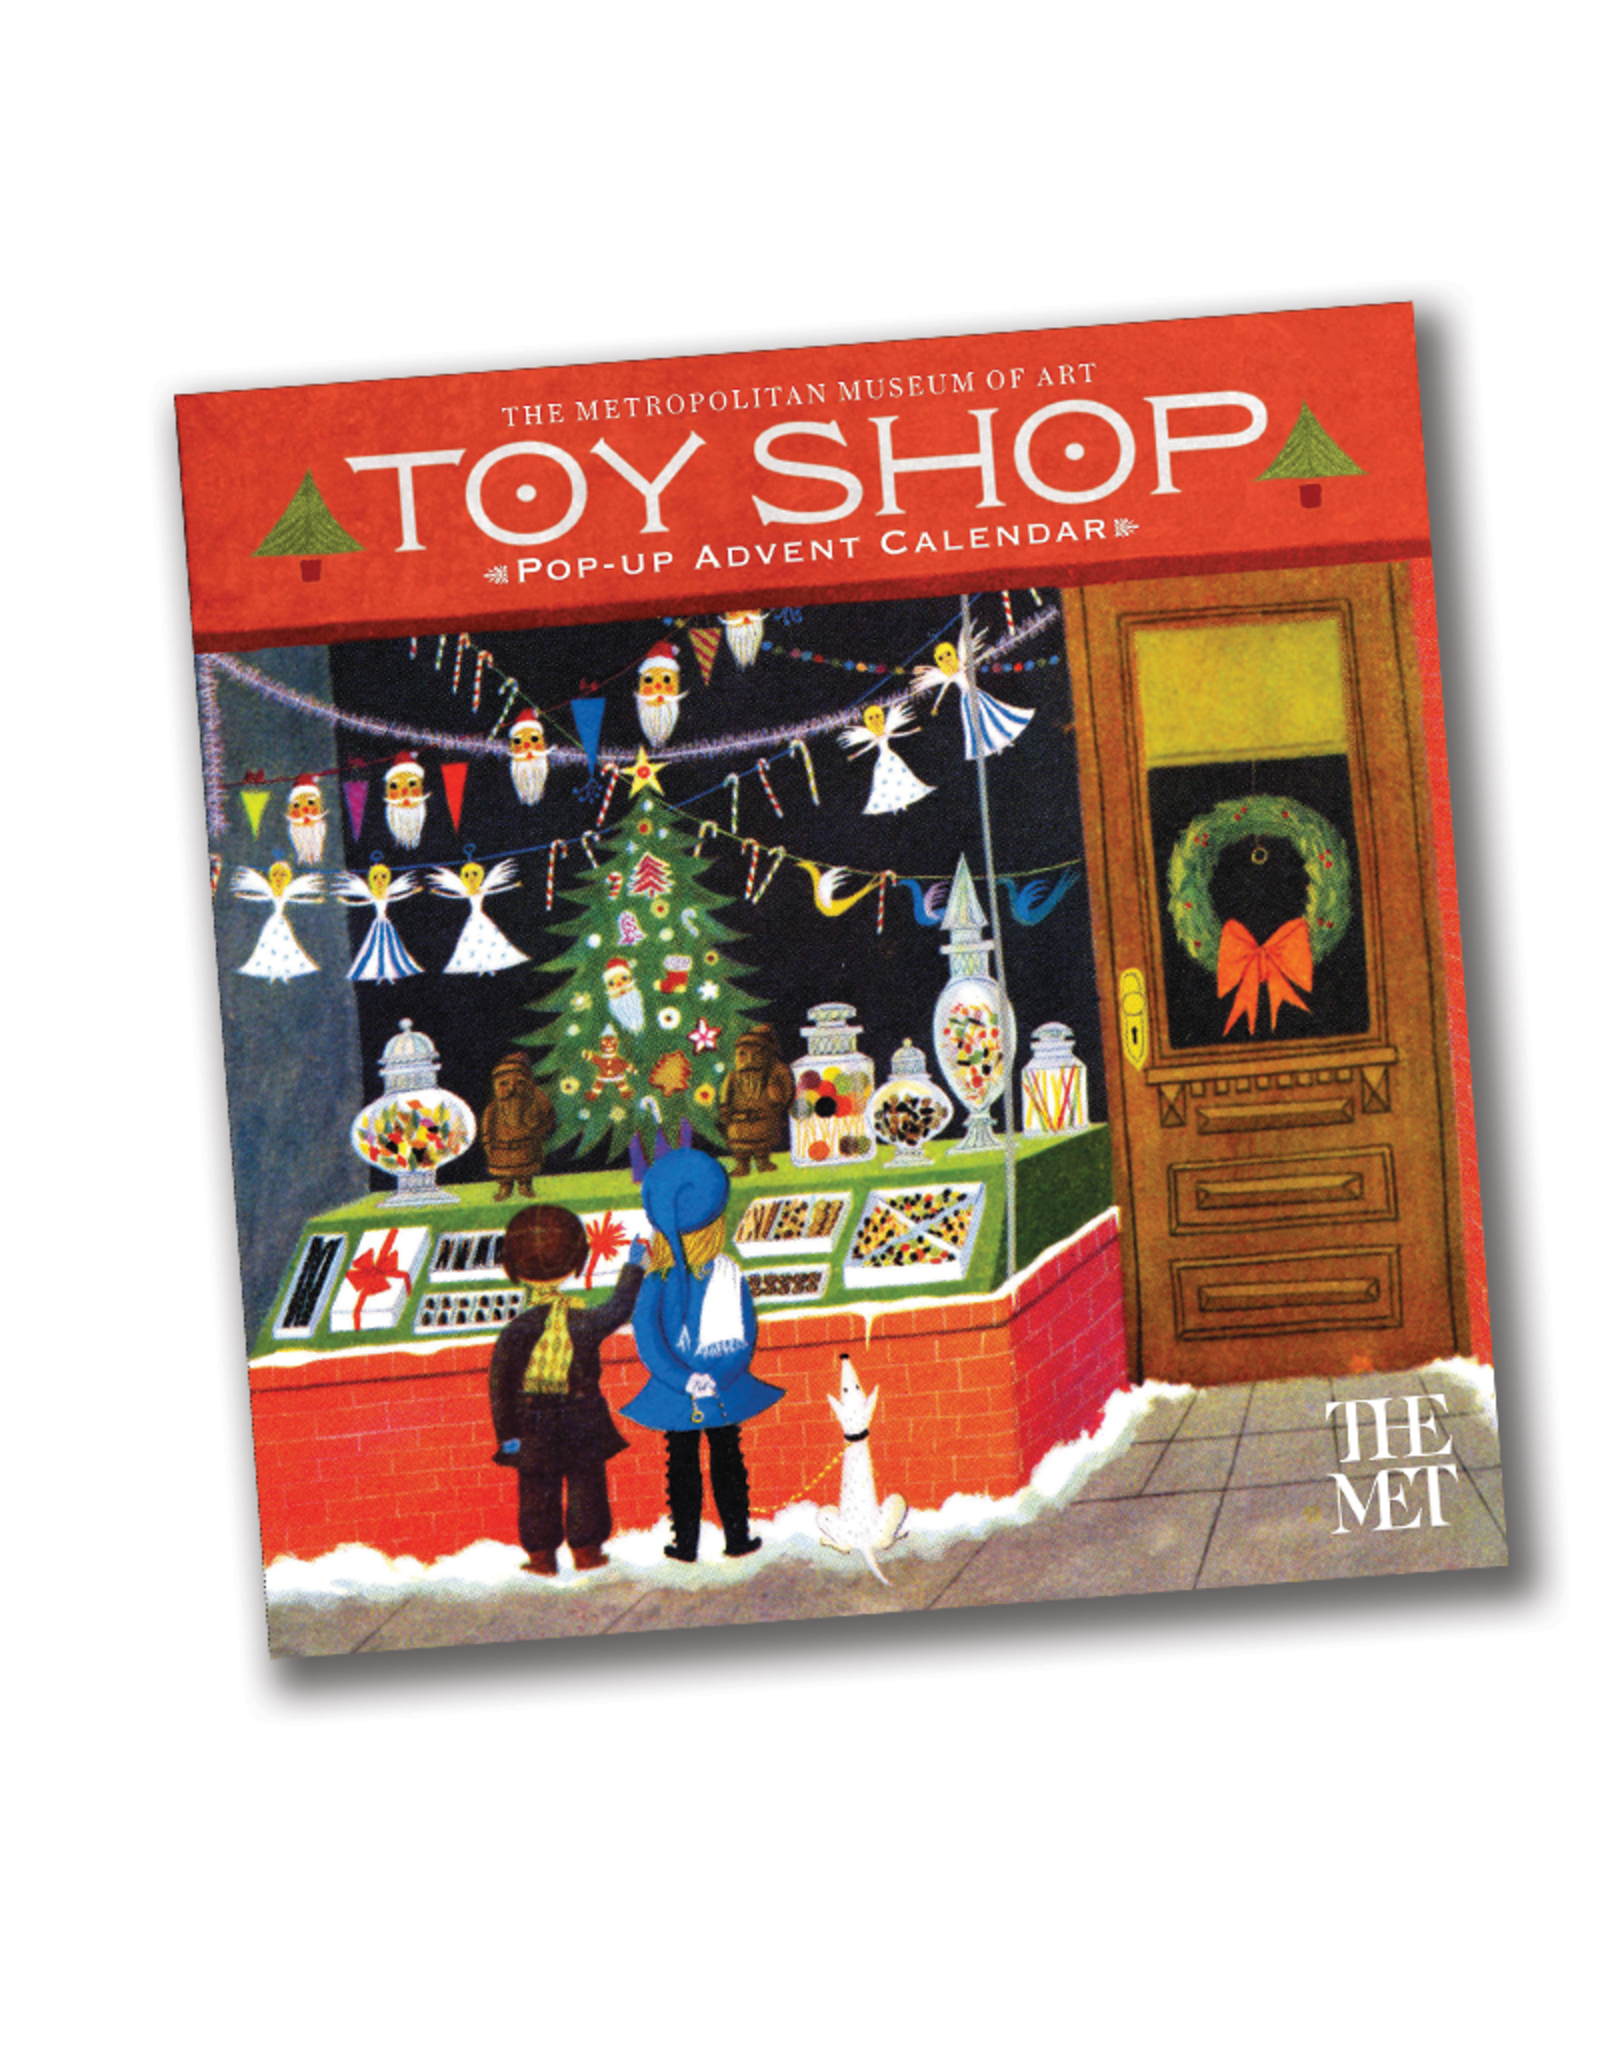 The Toy Shop Advent Calendar